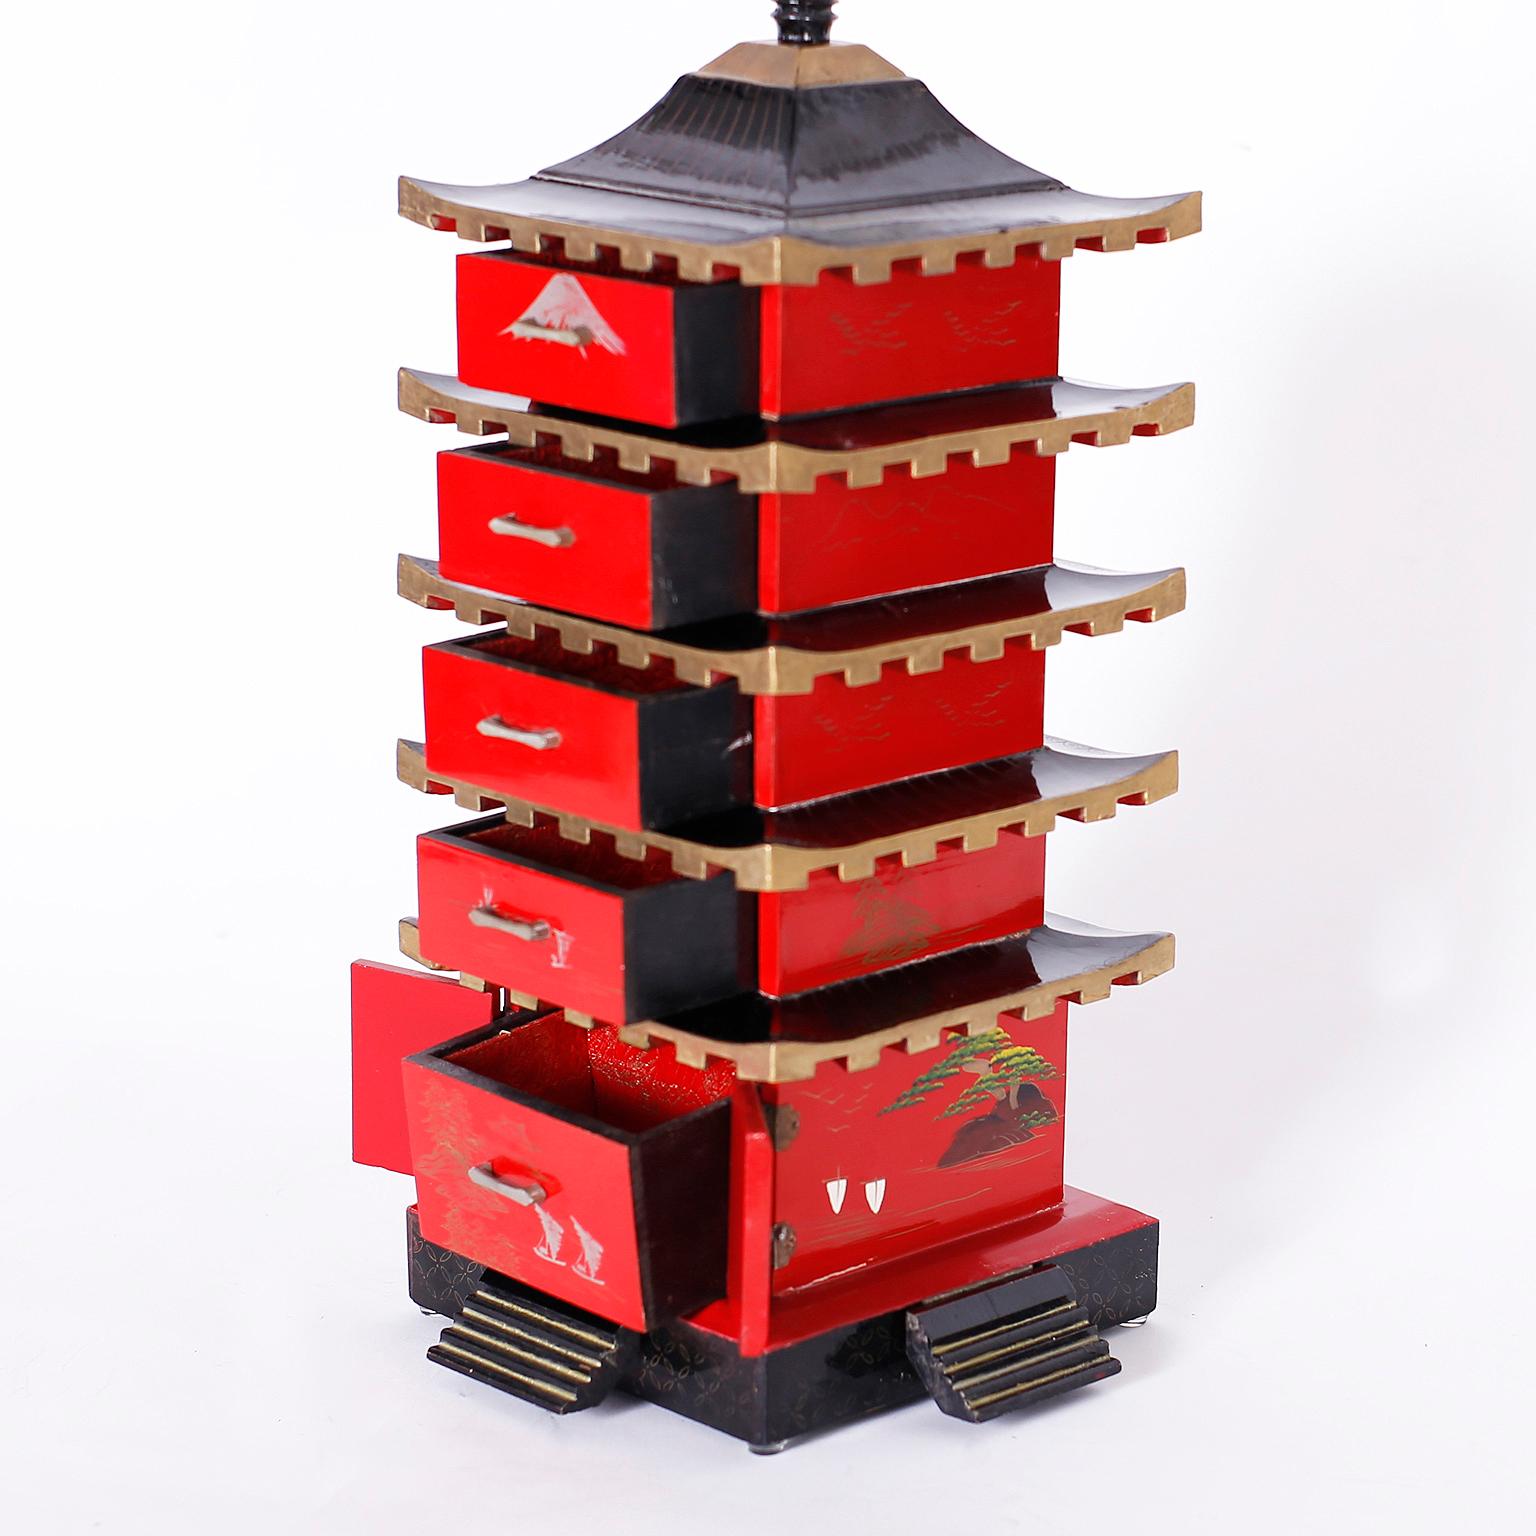 Hand-Painted Japanese Pagoda Jewelry or Keepsake Box